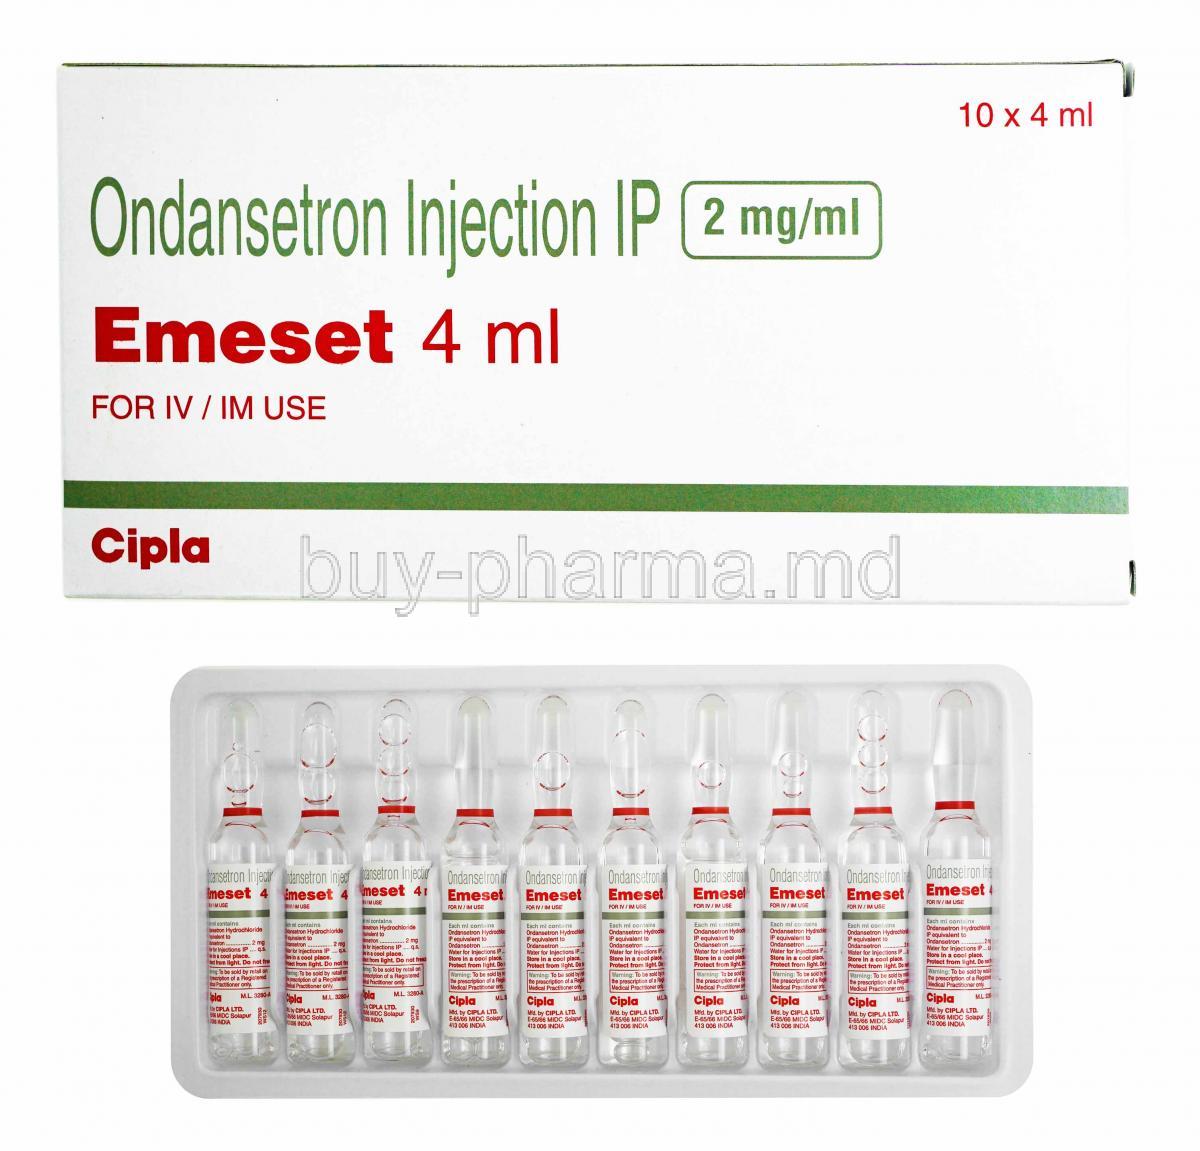 Emeset Injection, Ondansetron box and ampoules